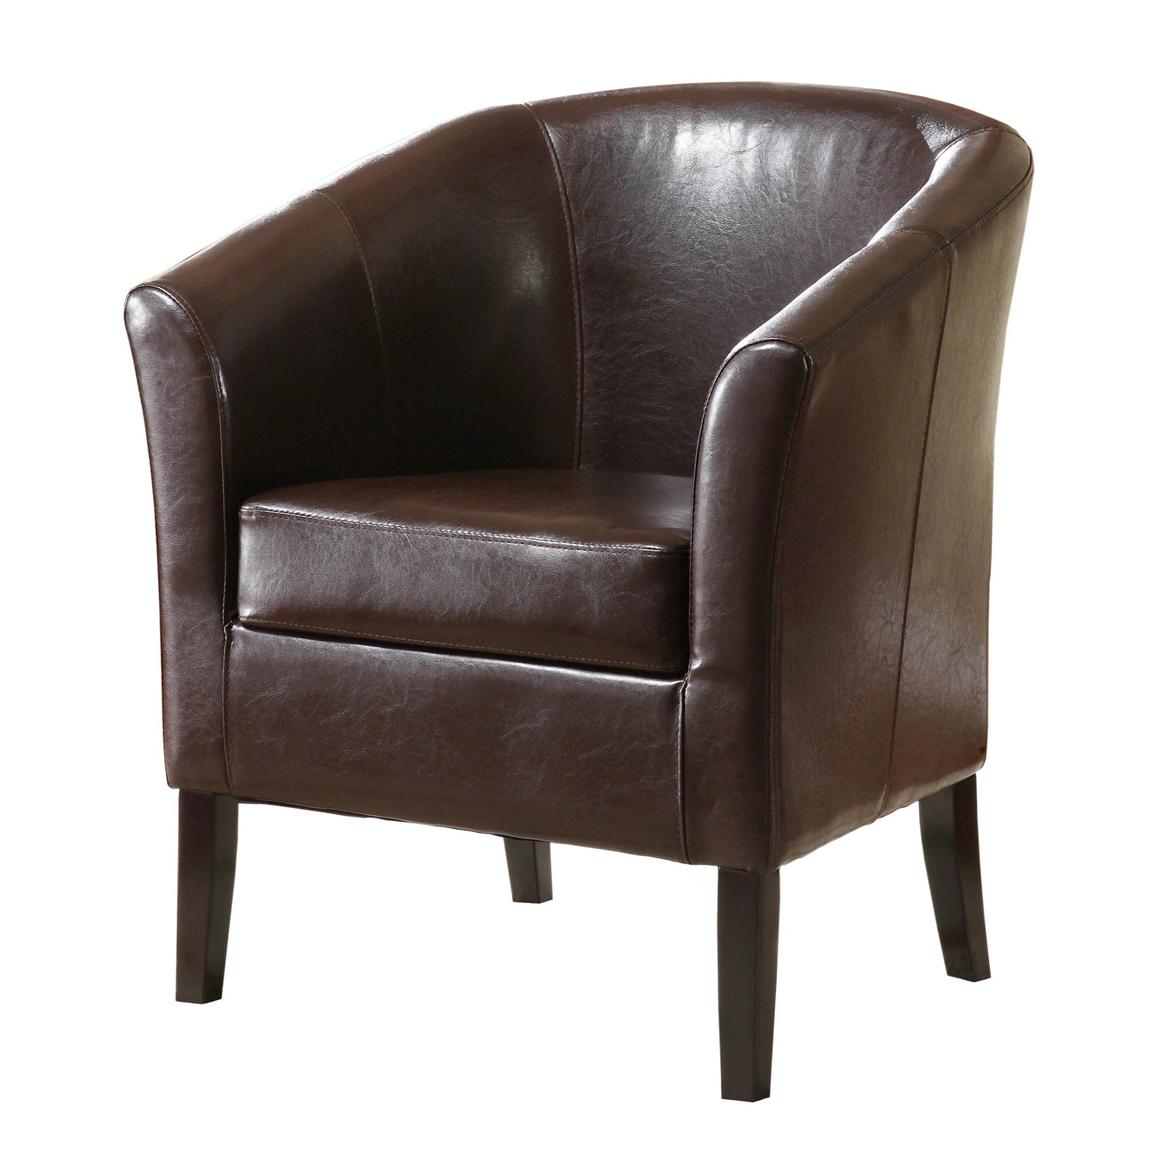 Linon Home Decor, Inc. Simon Club Chair - 206619, Living Room at